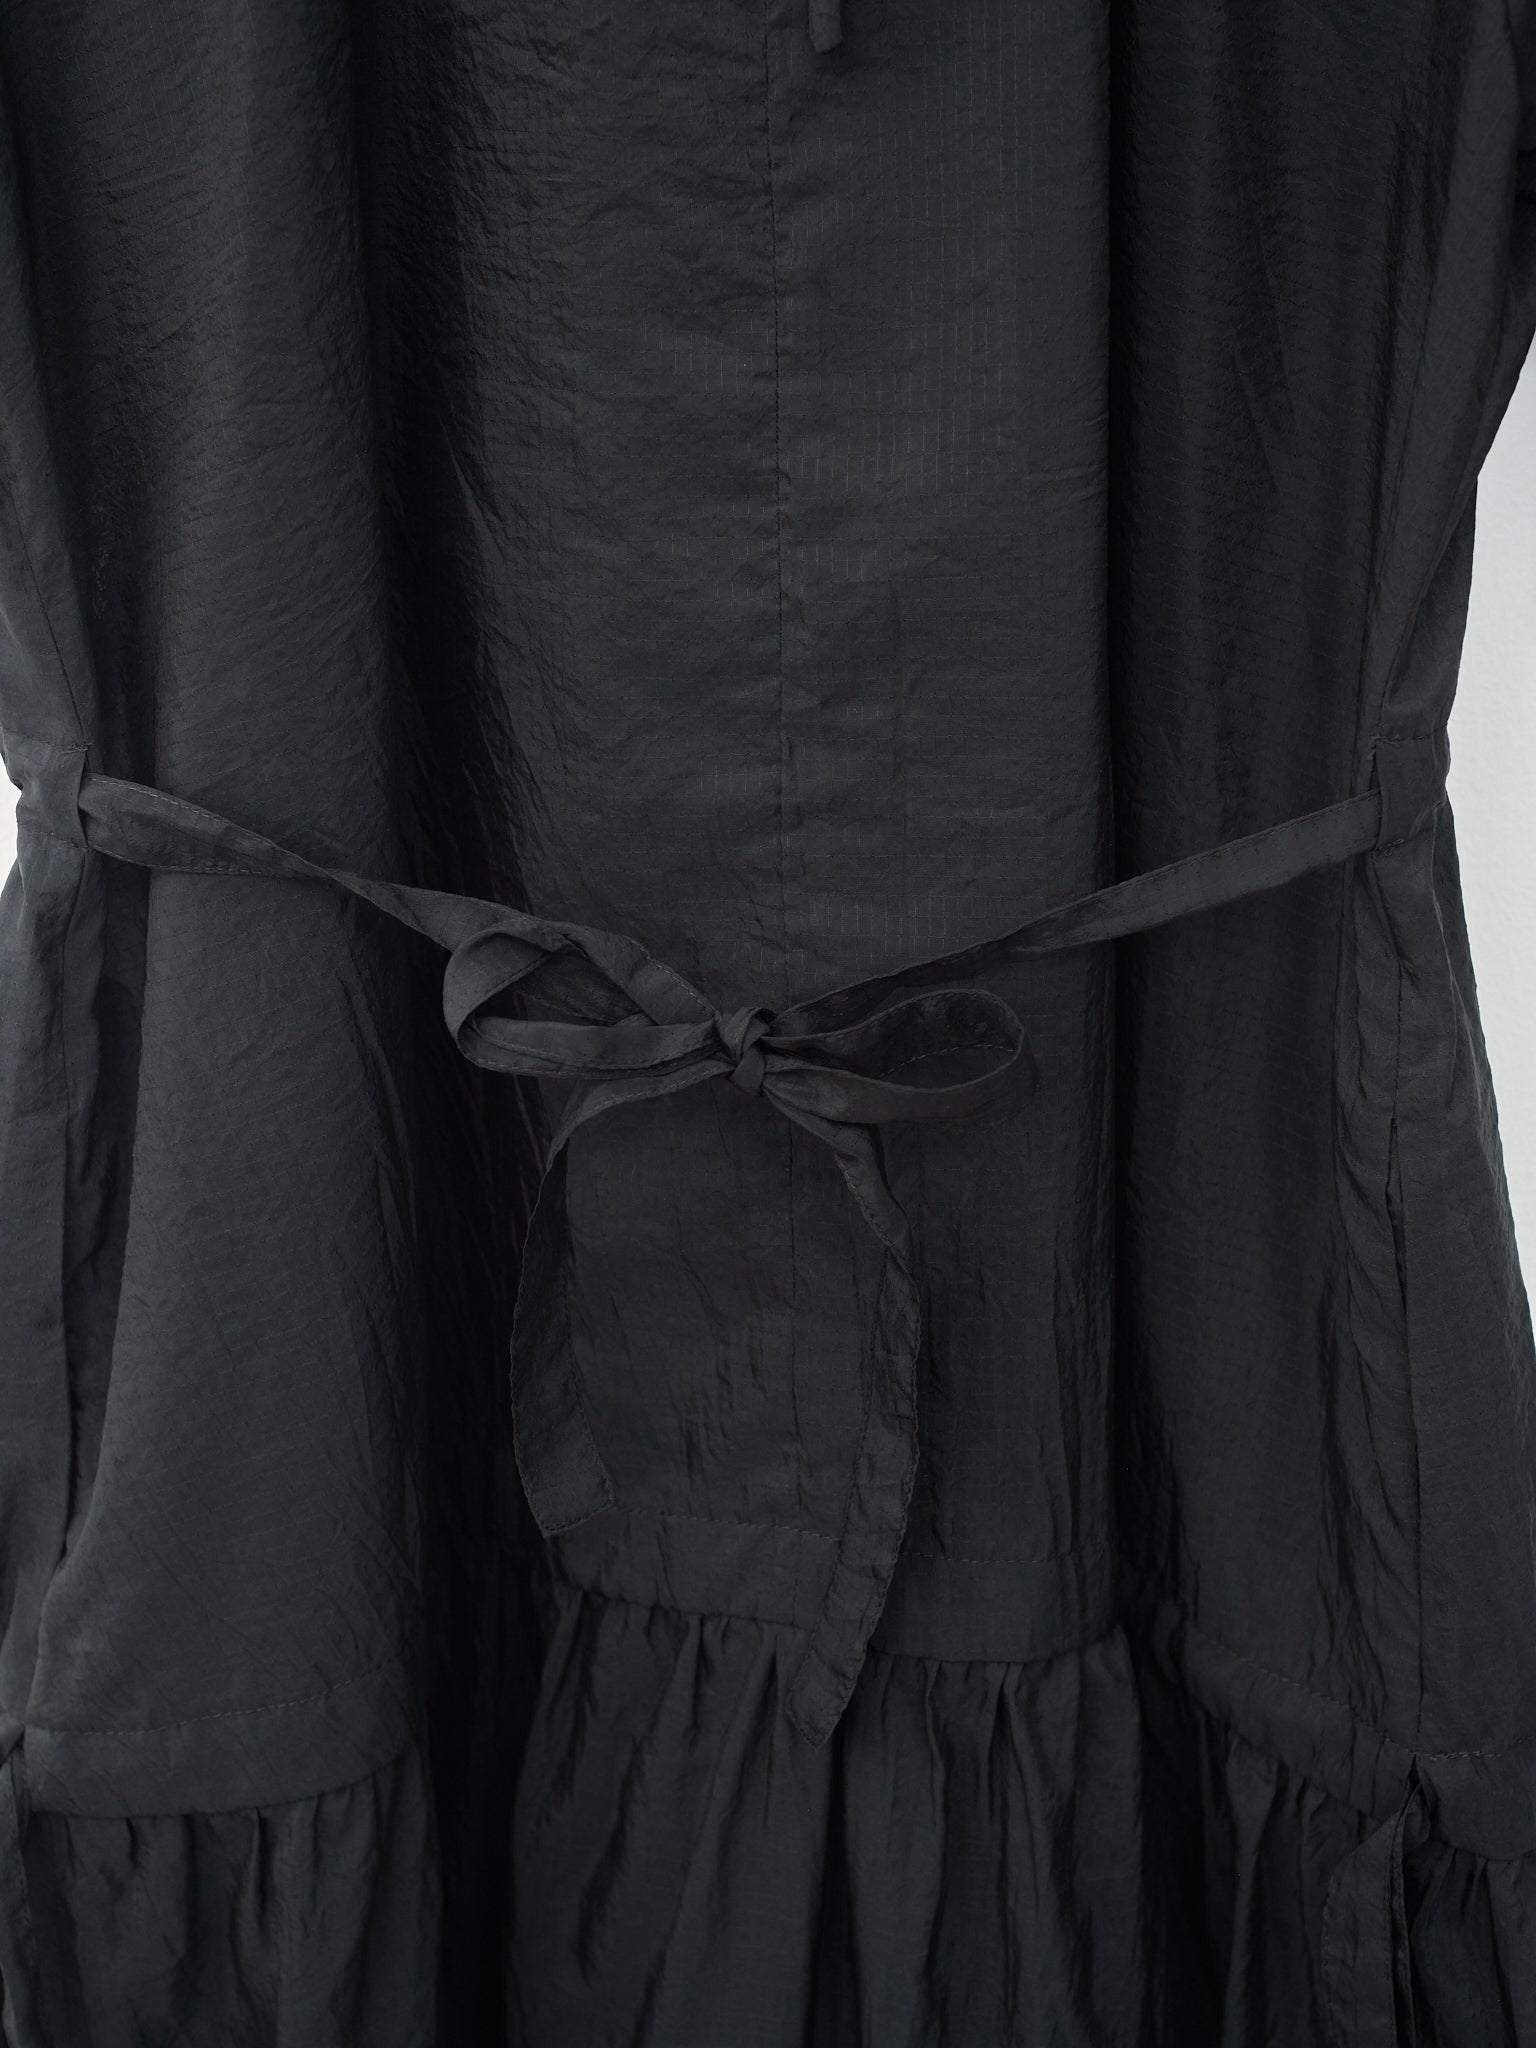 Namu Shop - Sara Lanzi Ripstop Balloon Dress - Black